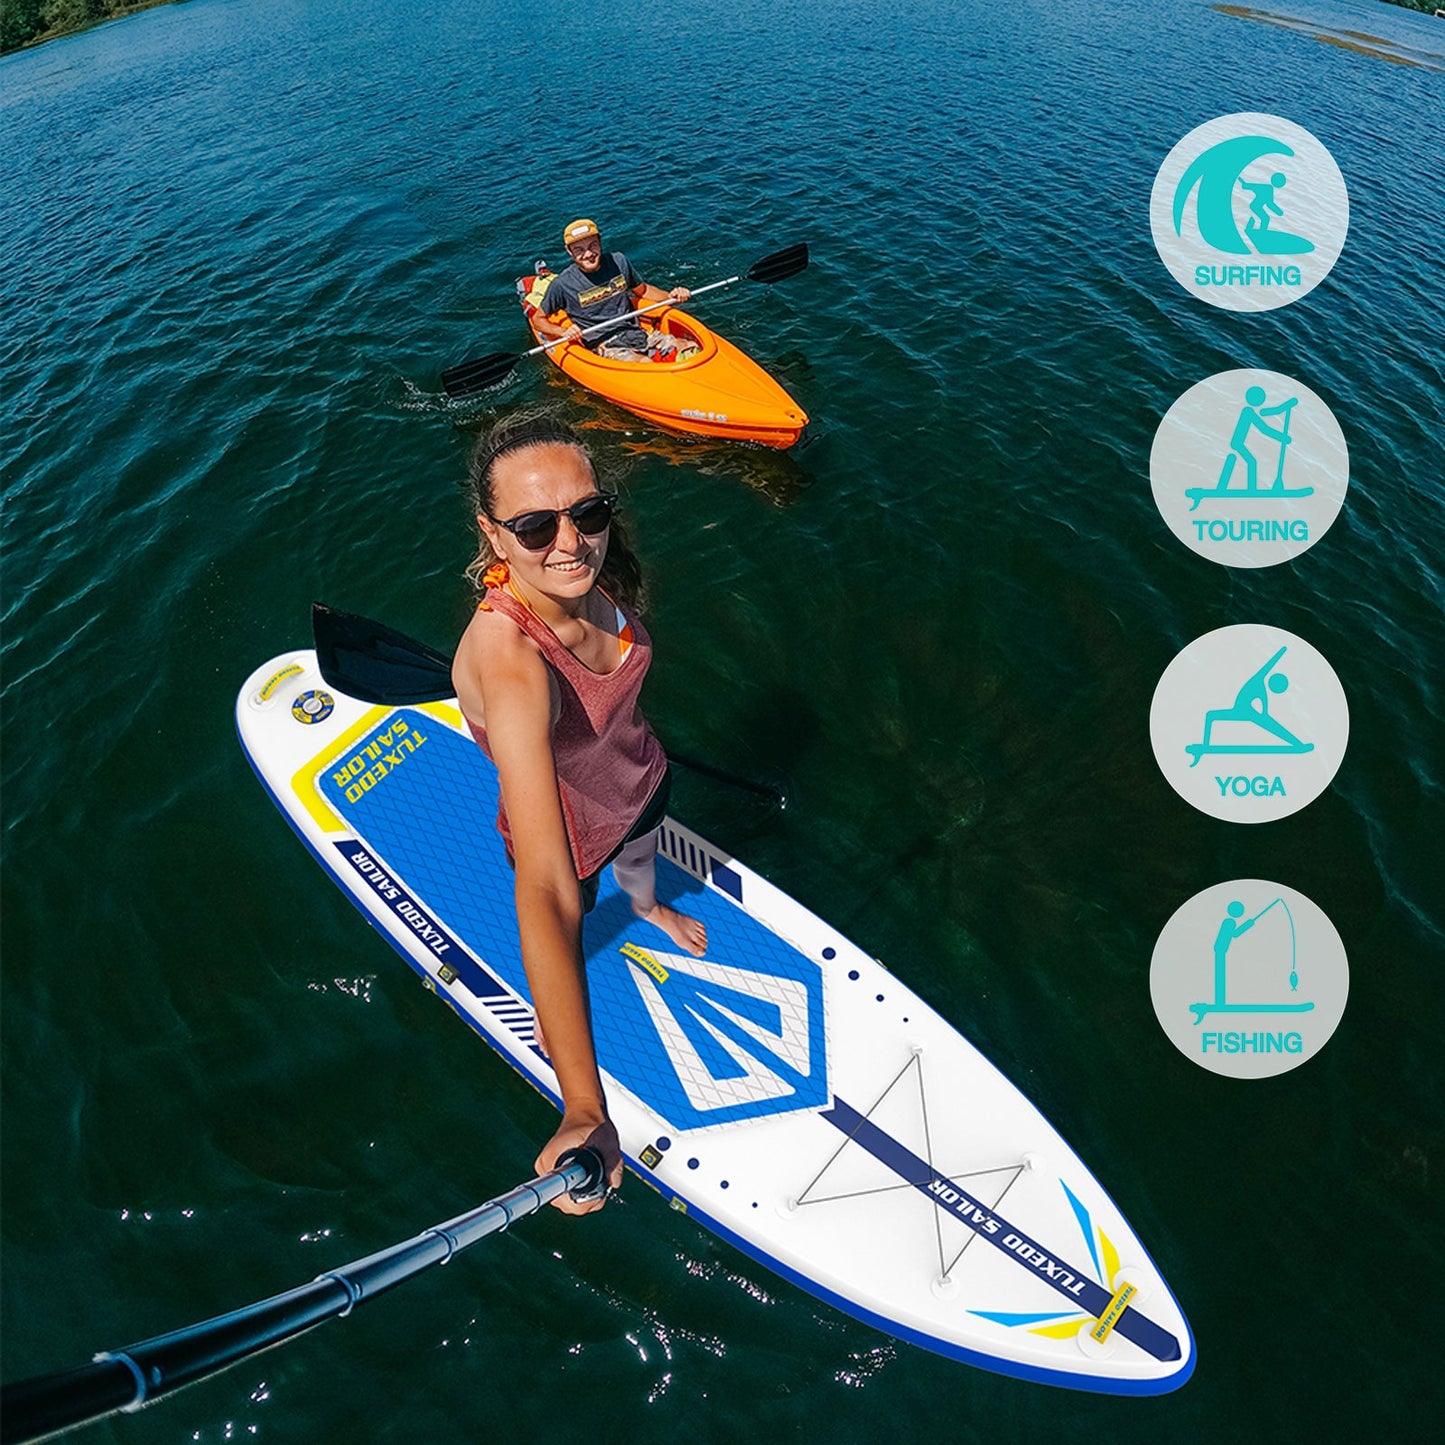 Tuxedo Sailor Paddle Board - Inflatable SUP Cetus 12′ Fishing – TUXEDO  SAILOR EU